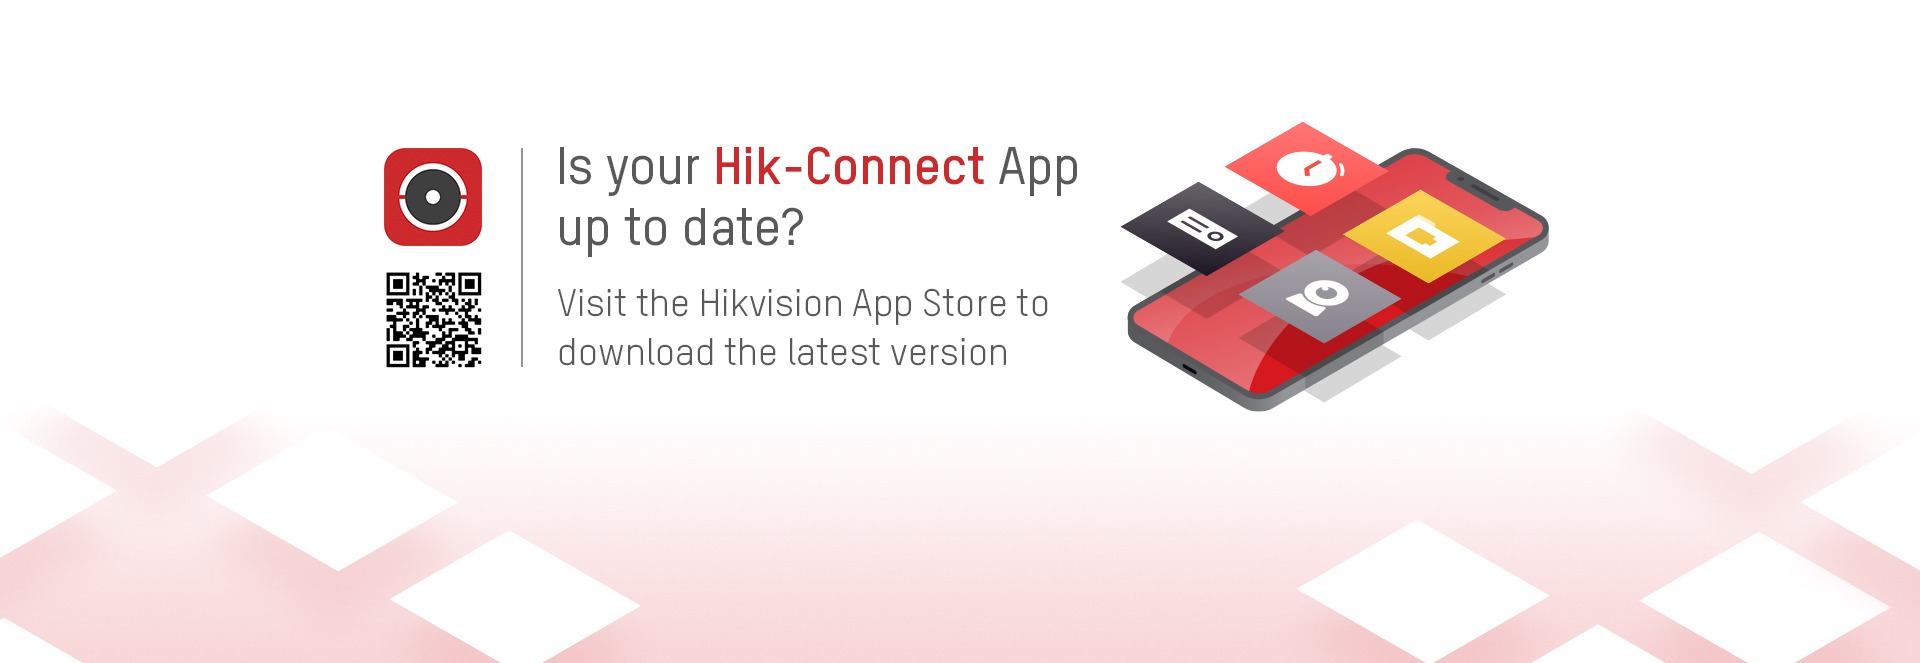 Hikvision App Store